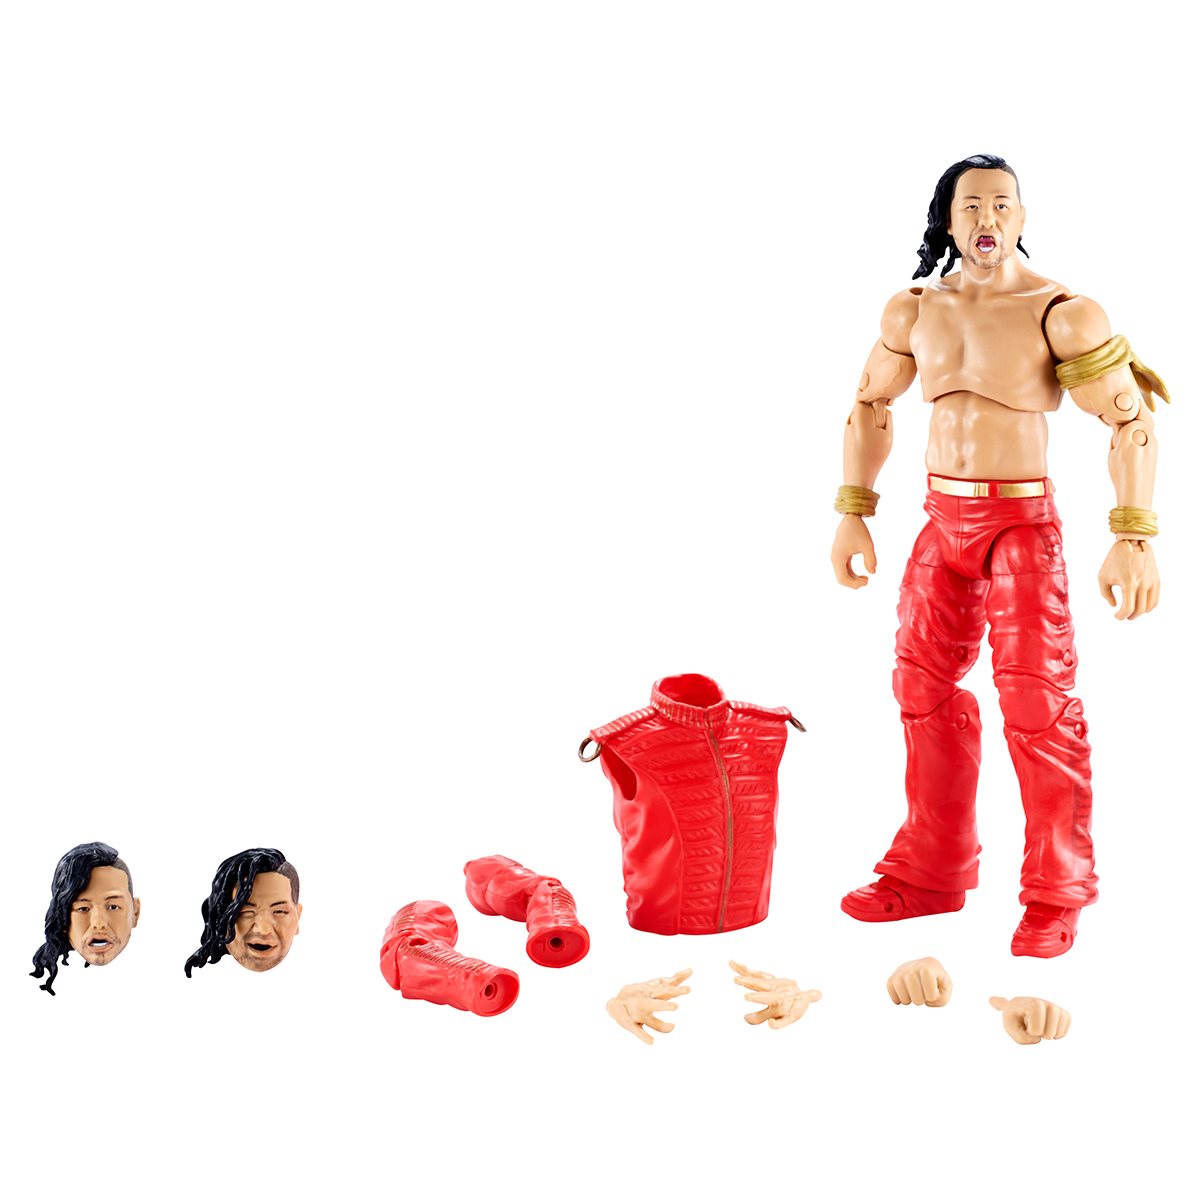  WWE Figure - Shinsuke Nakamura Elite Collection